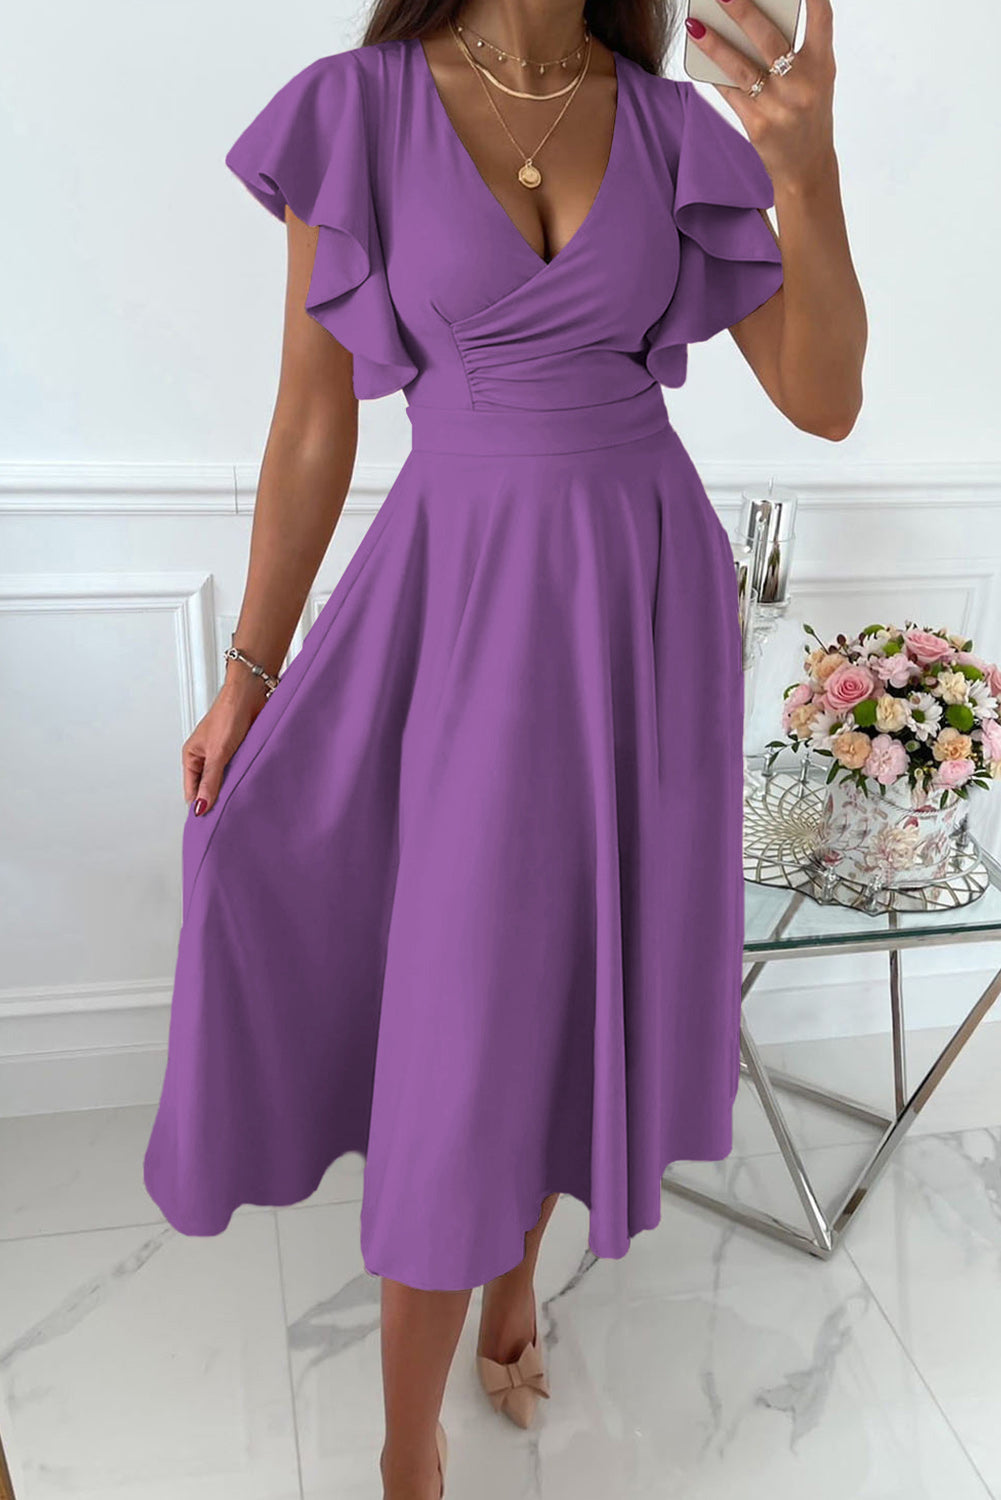 LC6110363-8-S, LC6110363-8-M, LC6110363-8-L, LC6110363-8-XL, LC6110363-8-2XL, Purple Womens V Neck Ruffle Sleeve Wrap Dress Midi Dress Cocktail Party Dress